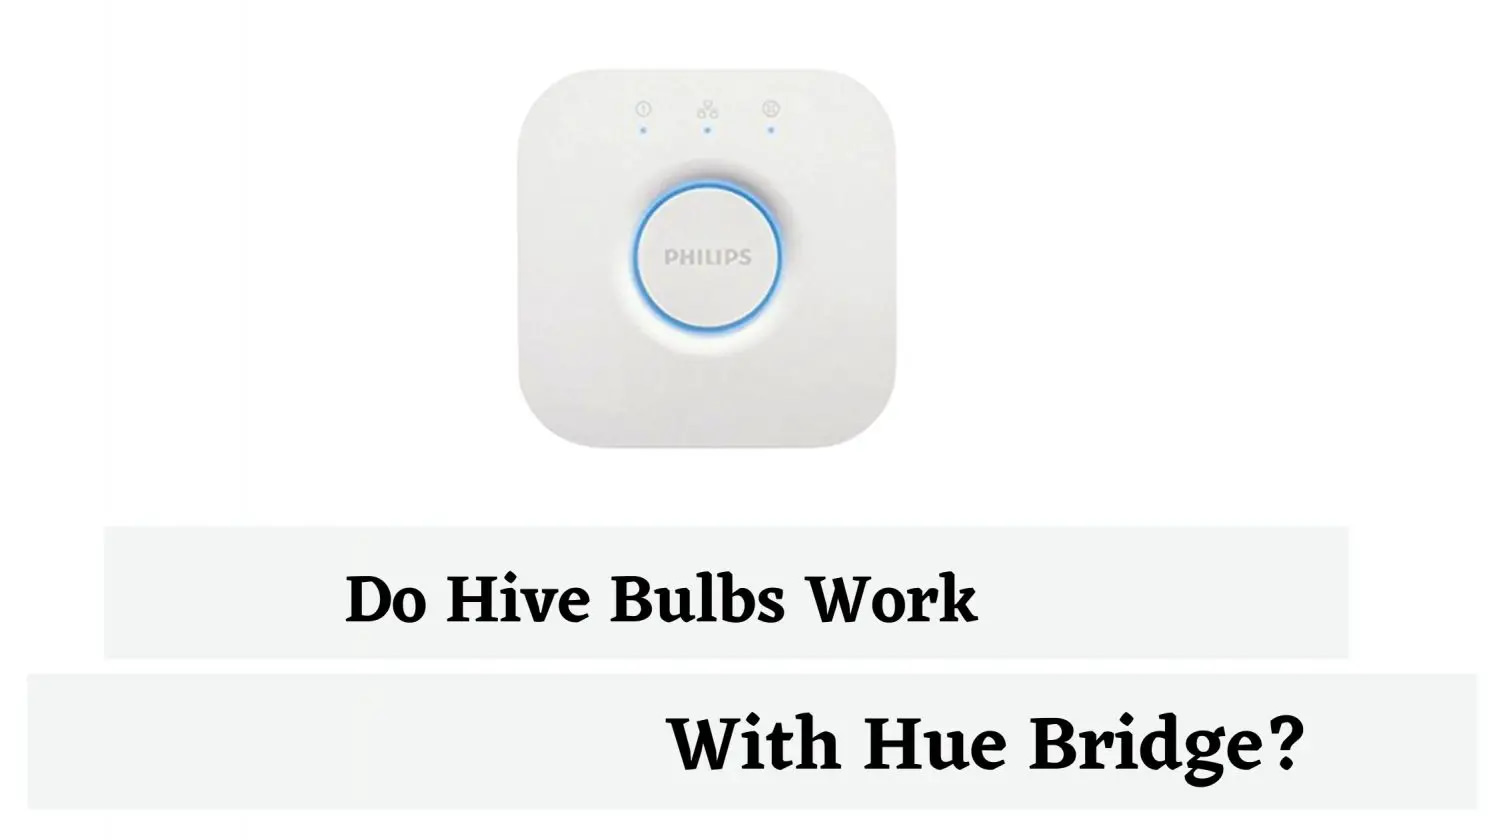 Do Hive Bulbs Work With Hue Bridge?